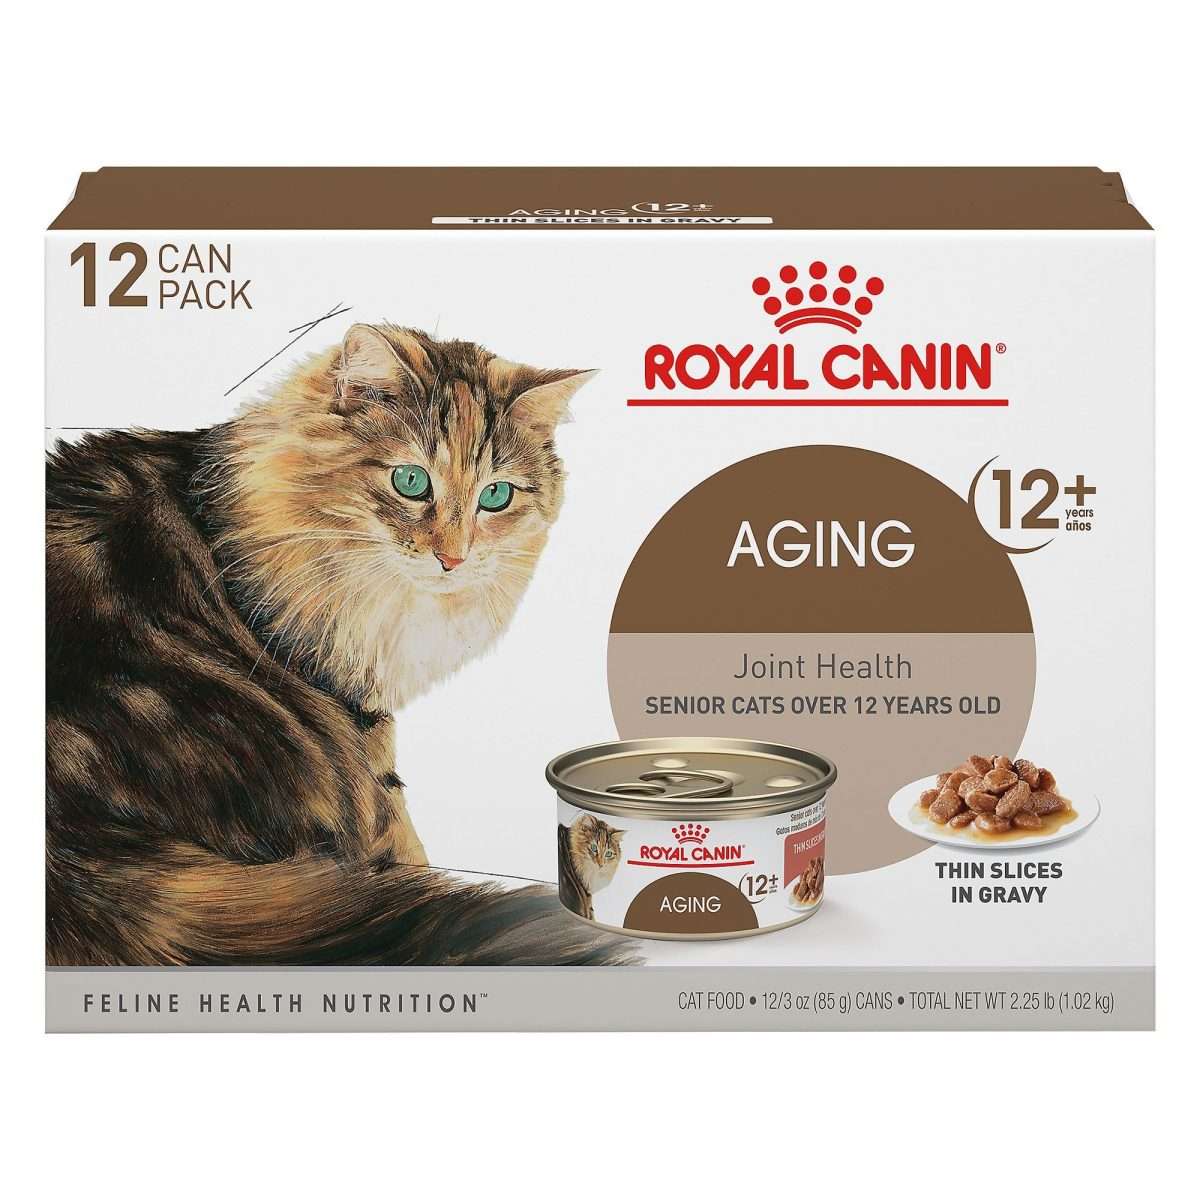 Royal Canin® Aging Senior Wet Cat Food